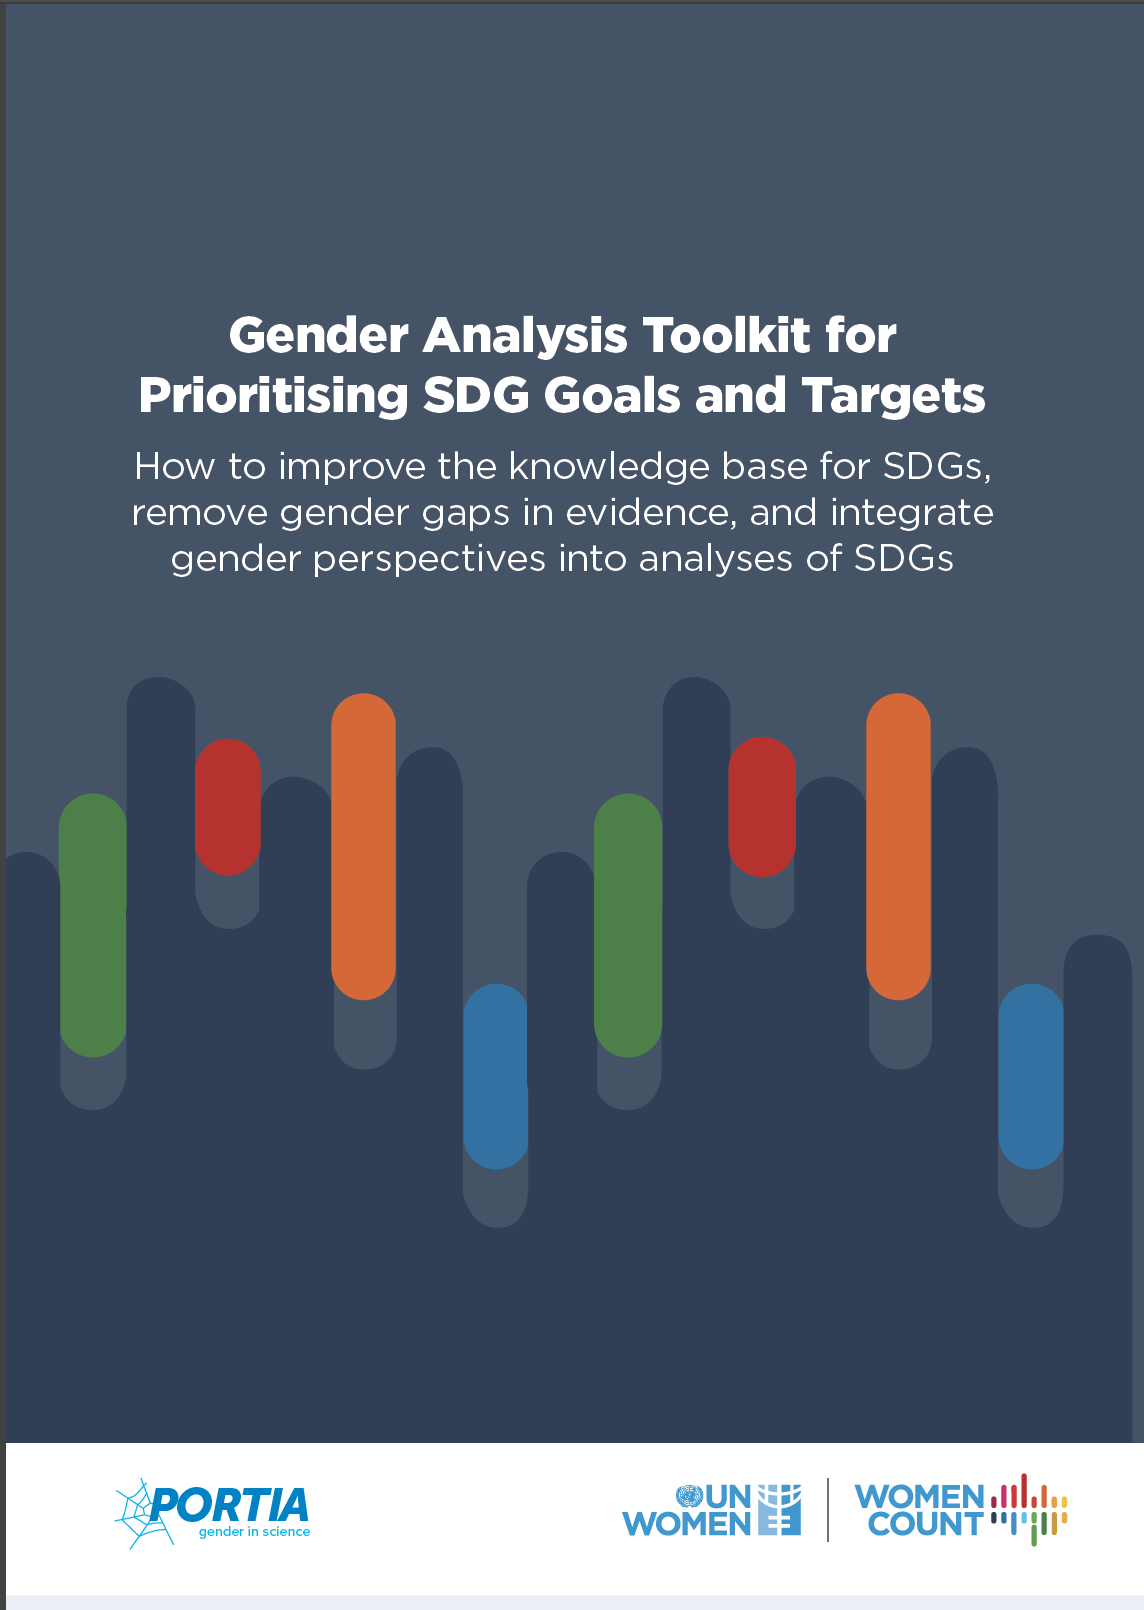 Portia Gender analysis toolkit cover 